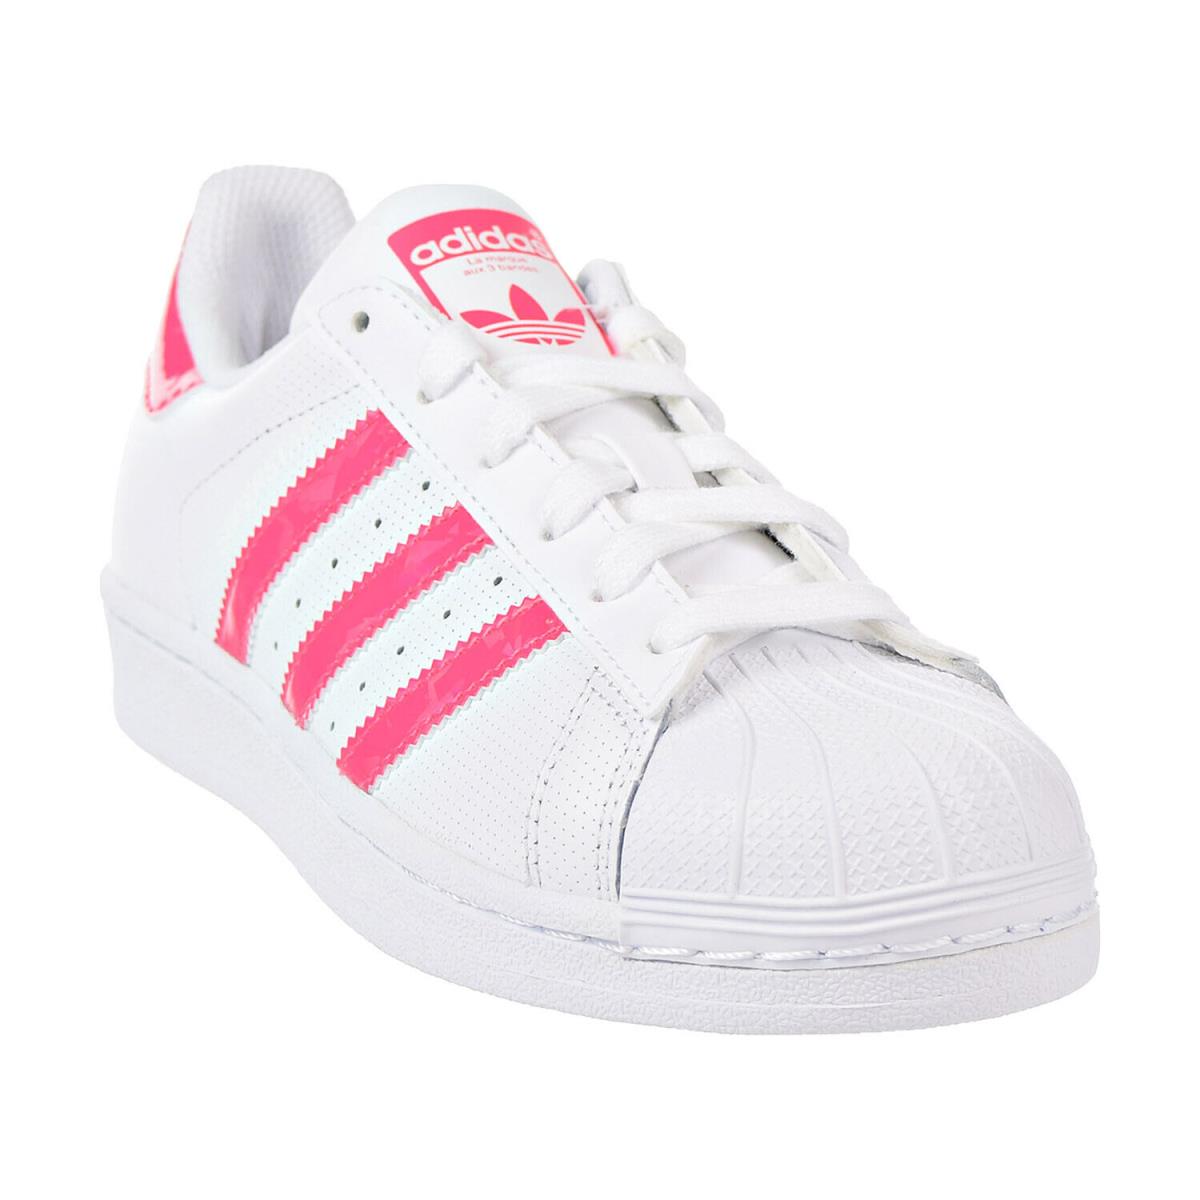 Adidas Superstar J Big Kids` Running Shoes Ft White-reapnk-ftwhite DB1210 - Ft White/ReaPnk/FtWhite